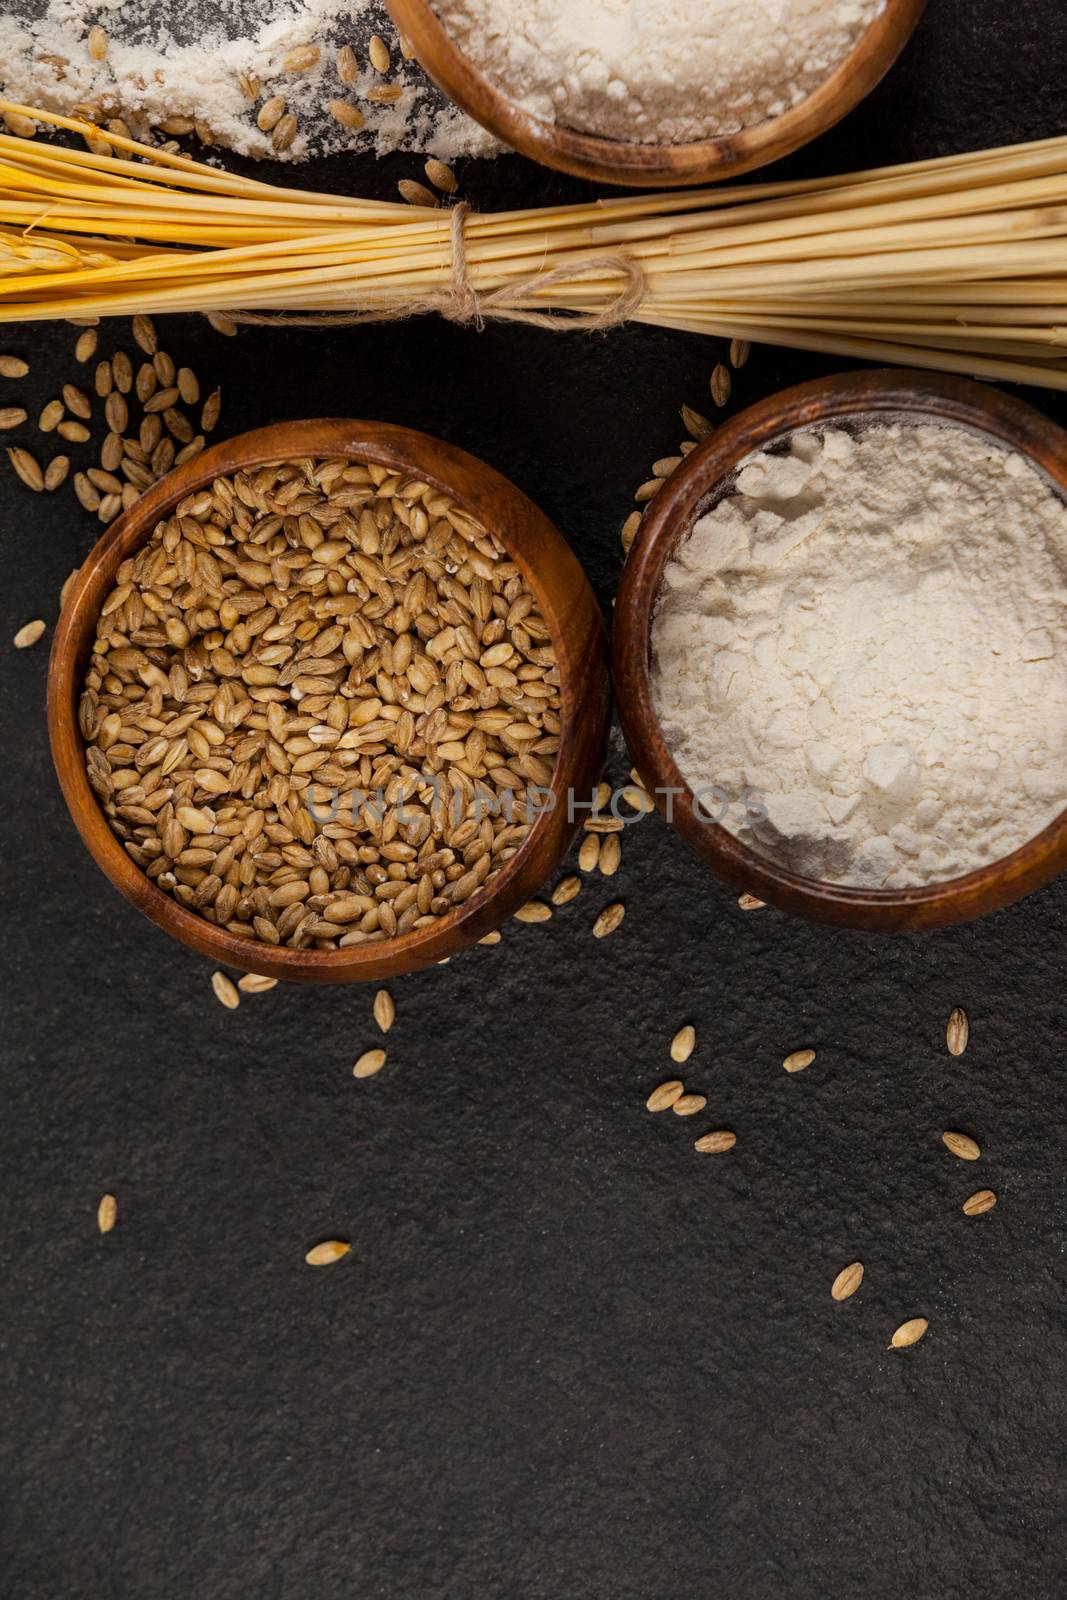 Wheat grains and flour by Wavebreakmedia